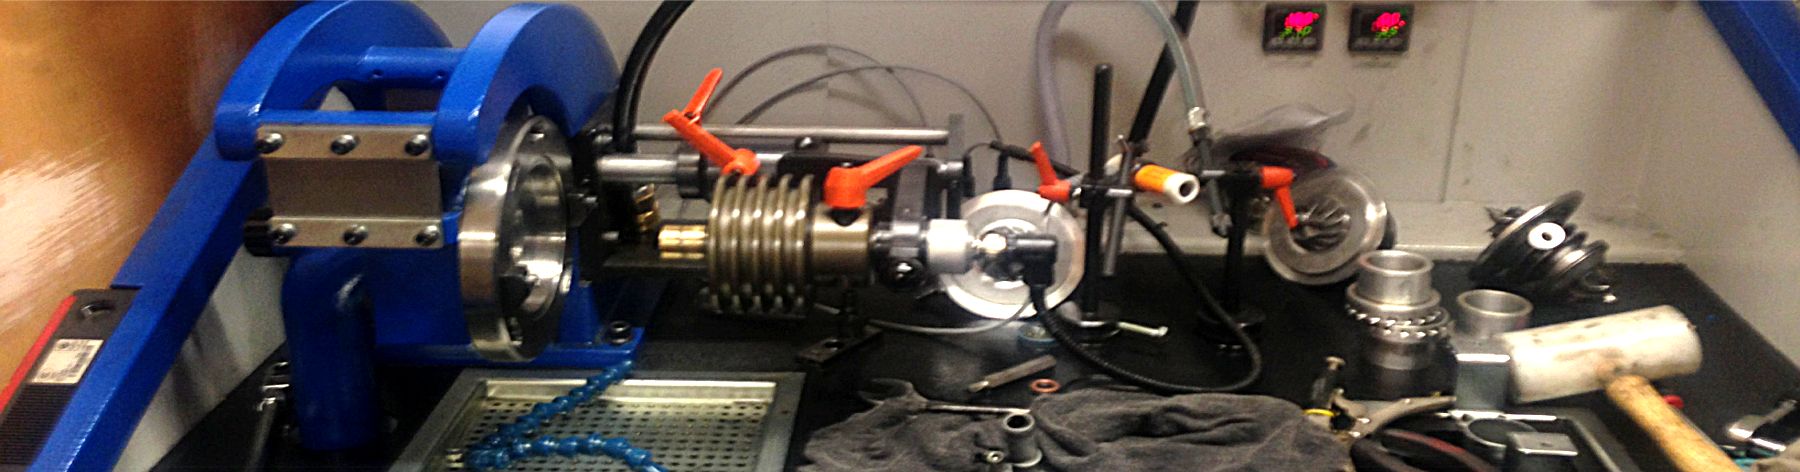 Testing machine for remanufactured alternators and starters by AllStart, Ireland